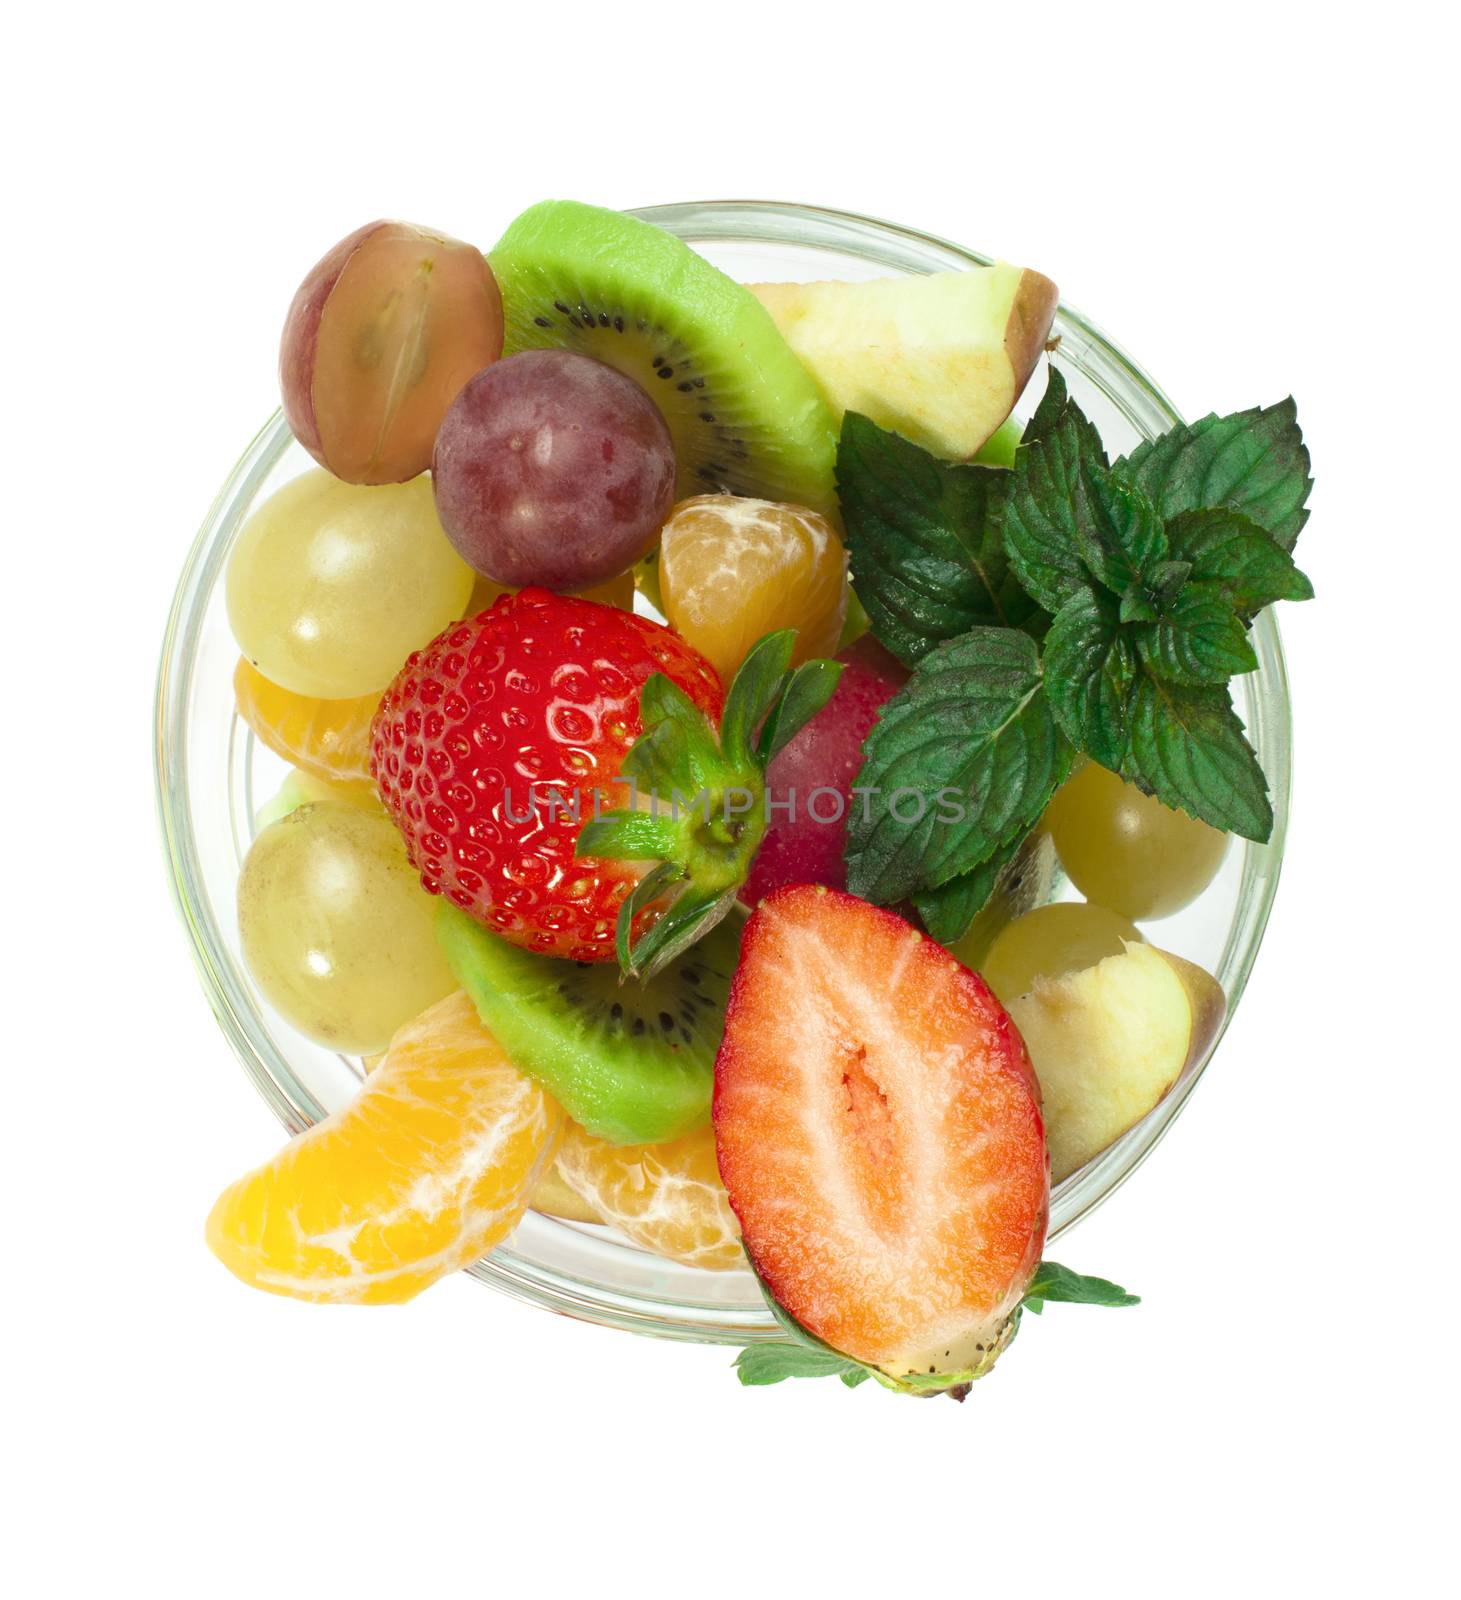 Fruit salad in a glass bowl  by deyan_georgiev